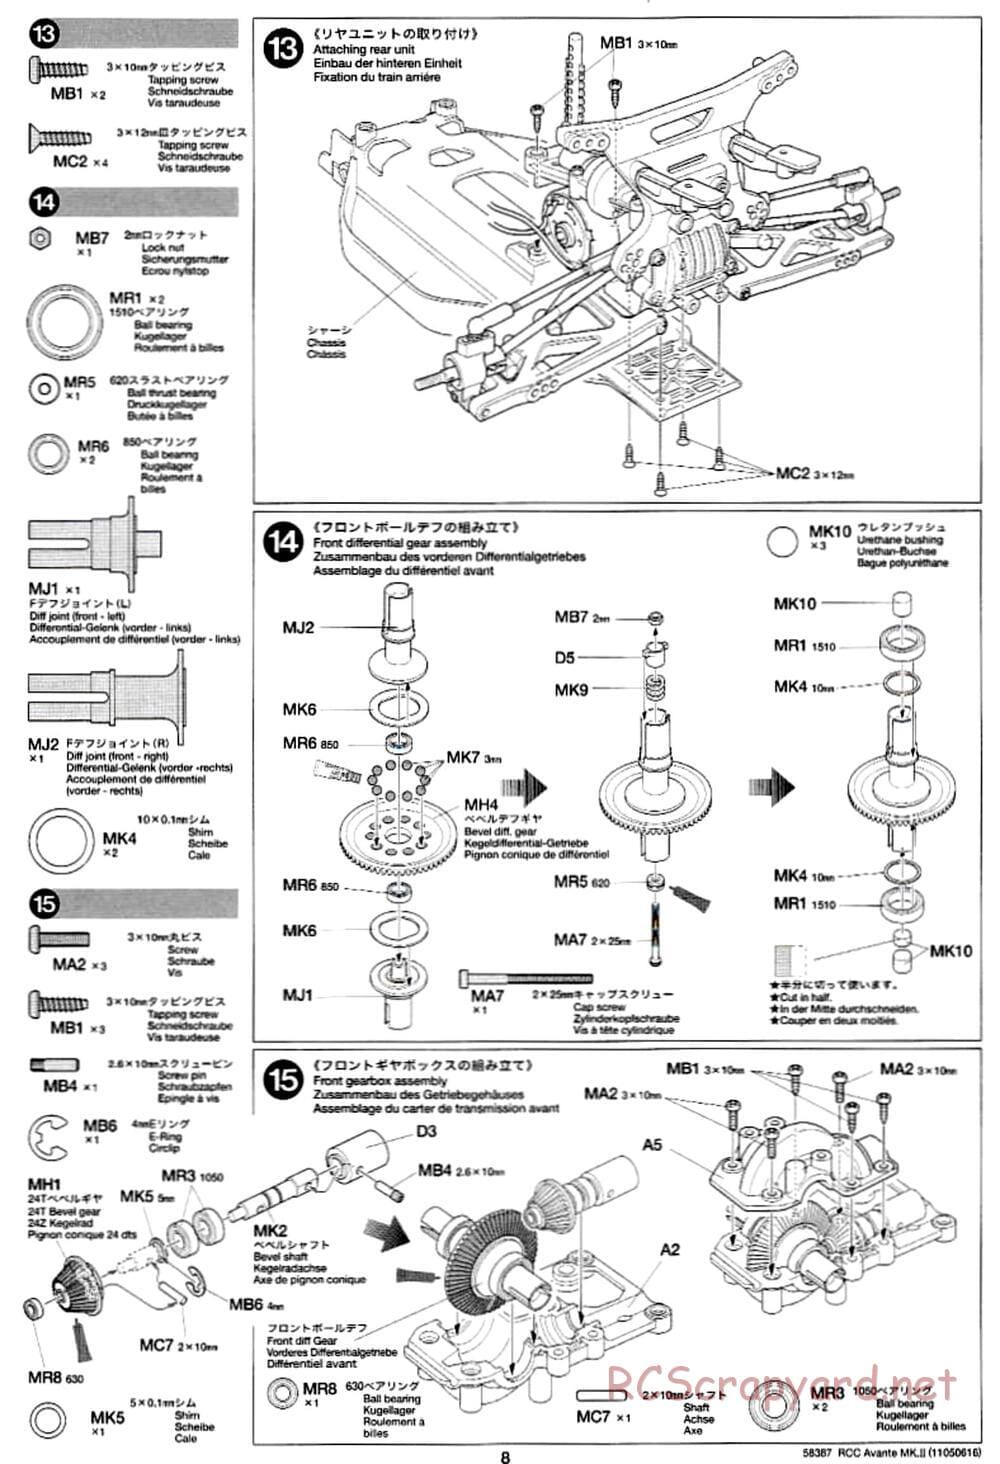 Tamiya - Avante Mk.II Chassis - Manual - Page 8